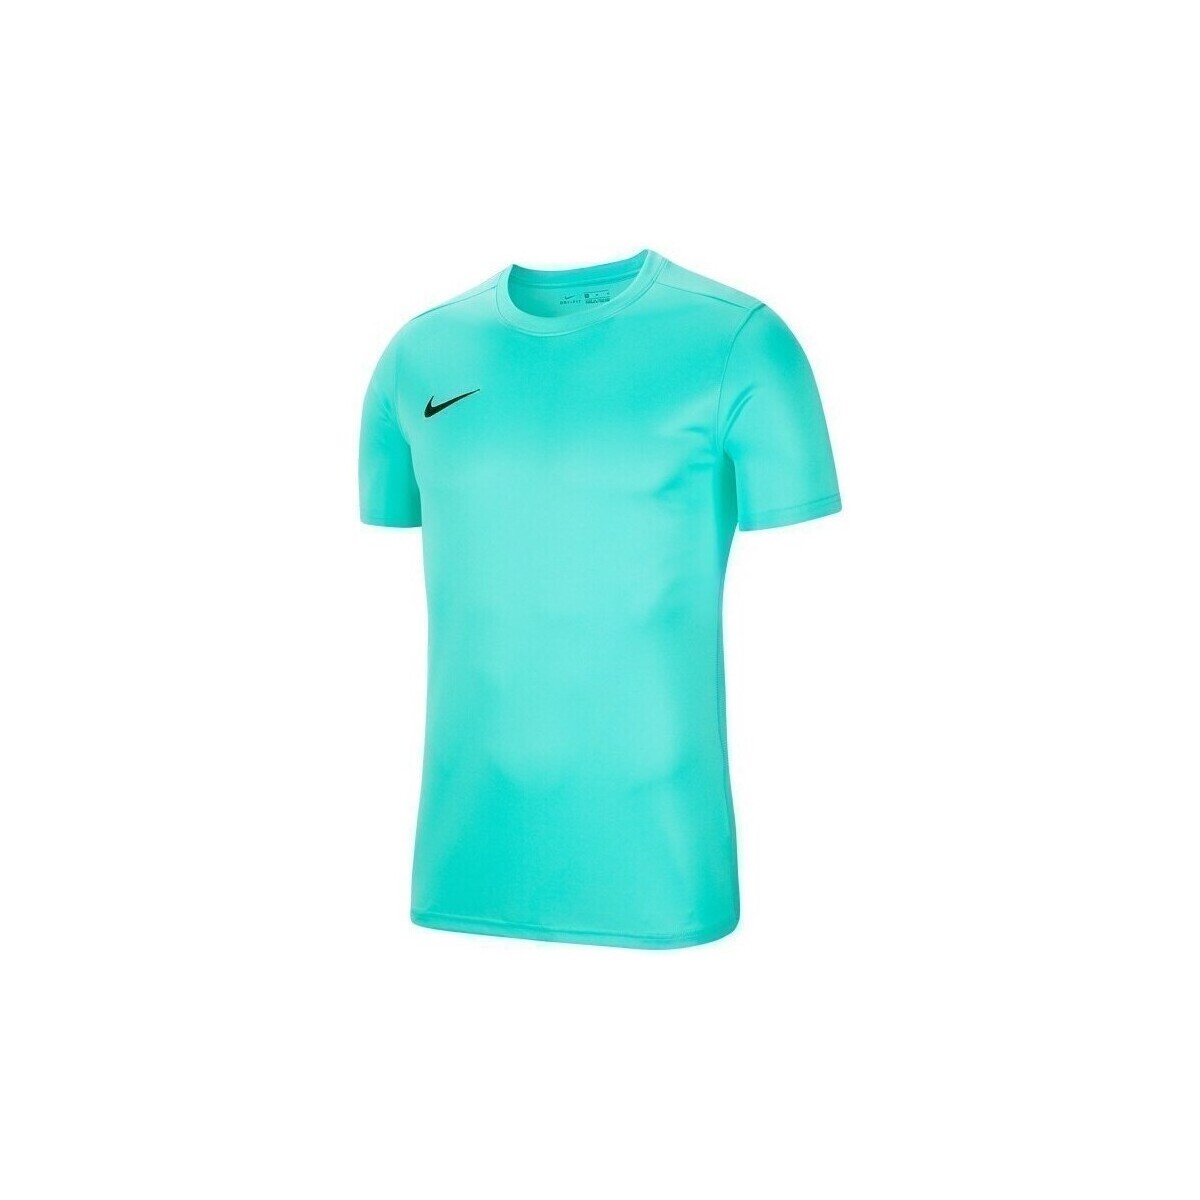 Clothing Boy Short-sleeved t-shirts Nike JR Dry Park Vii Turquoise